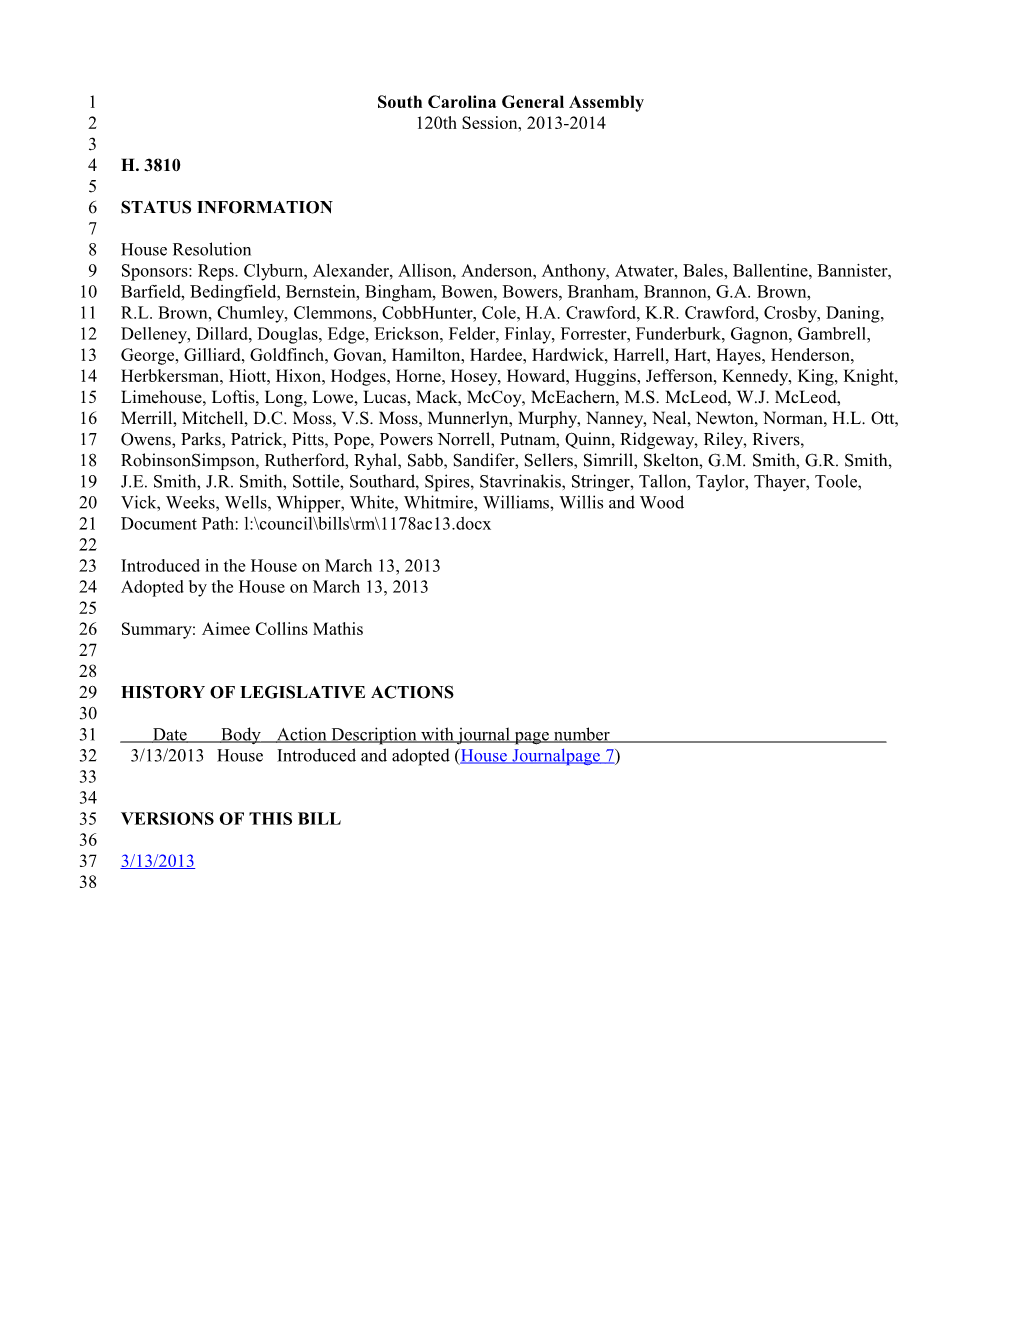 2013-2014 Bill 3810: Aimee Collins Mathis - South Carolina Legislature Online